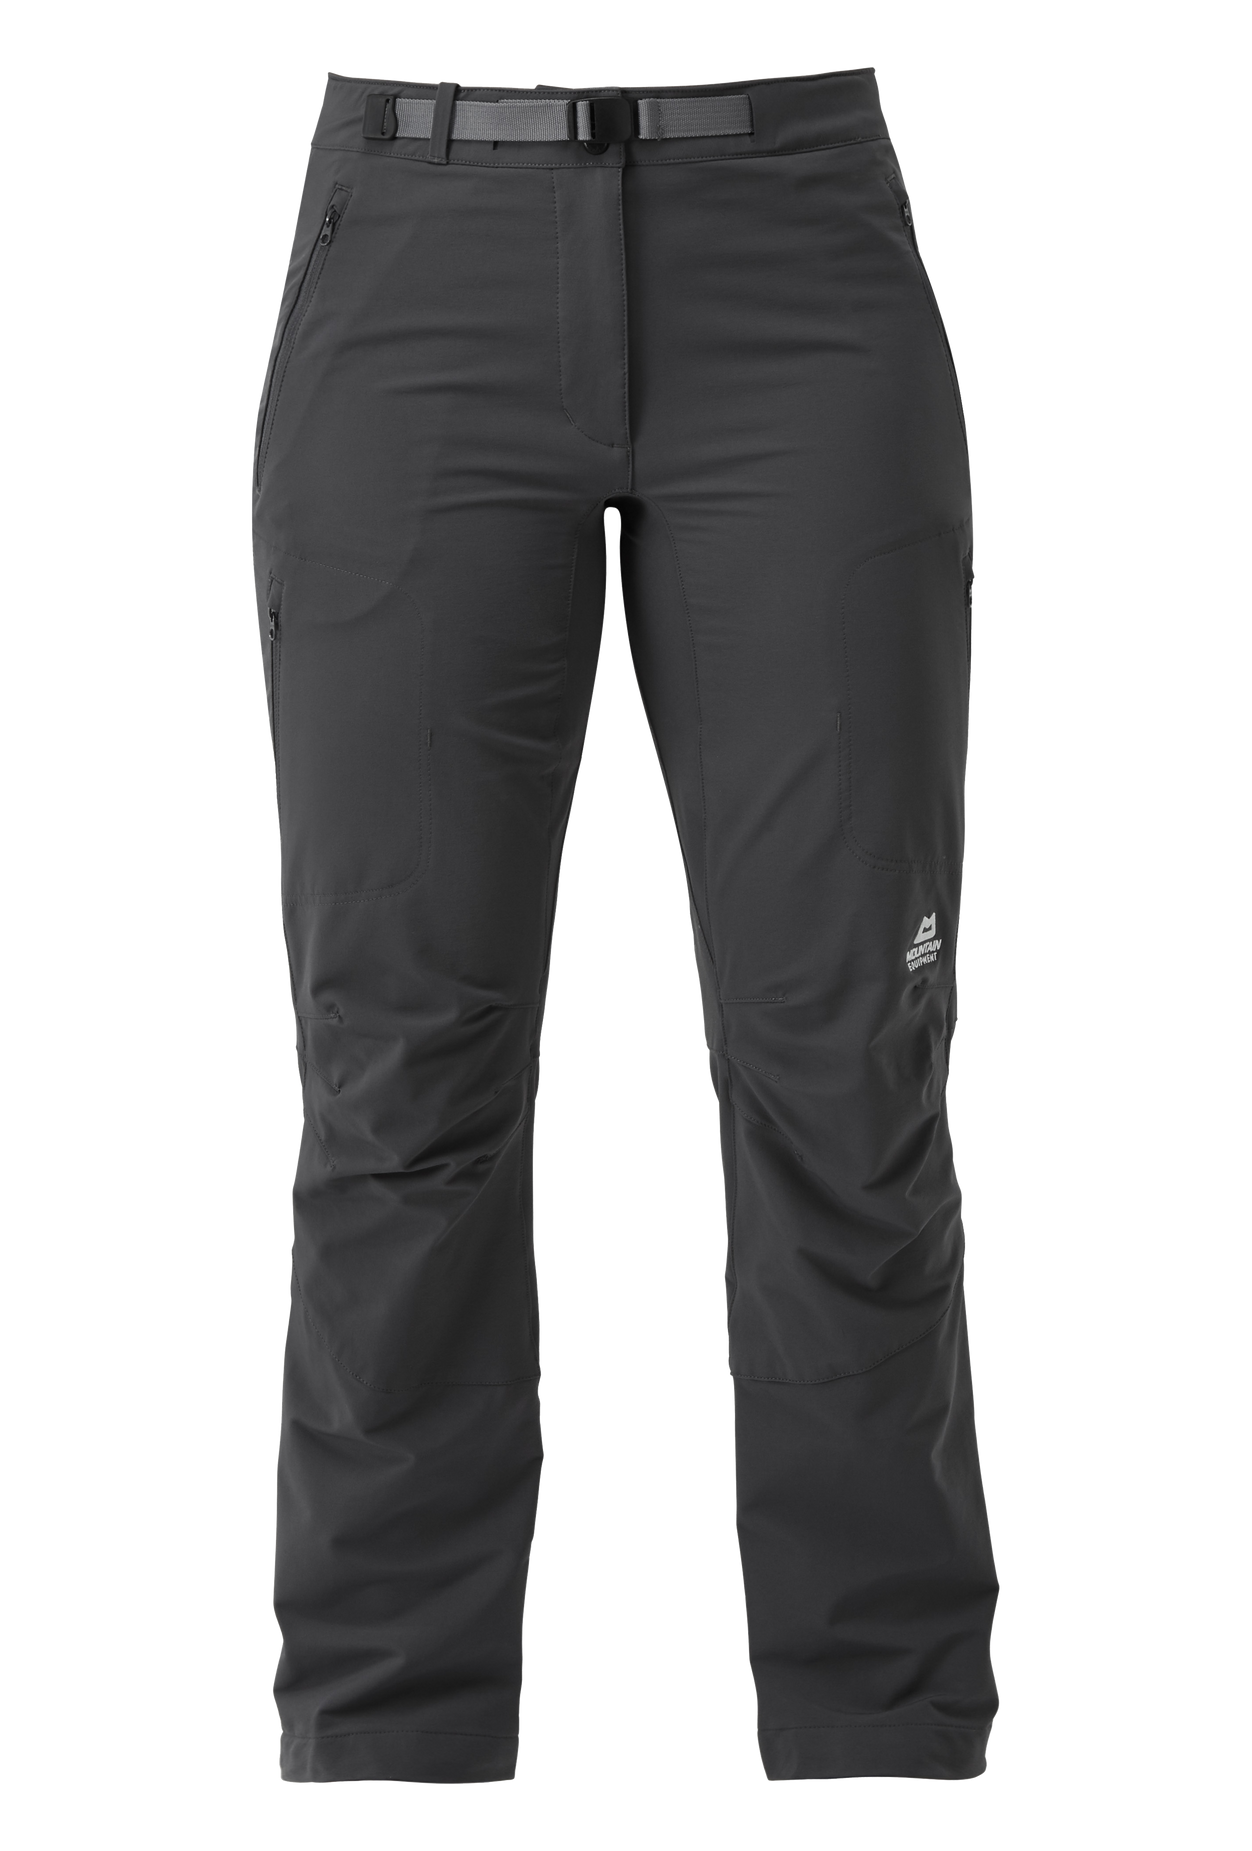 Mountain Equipment dámské softshellové kalhoty Chamois Wmns Pant Barva: Anvil Grey, Velikost: 14/L